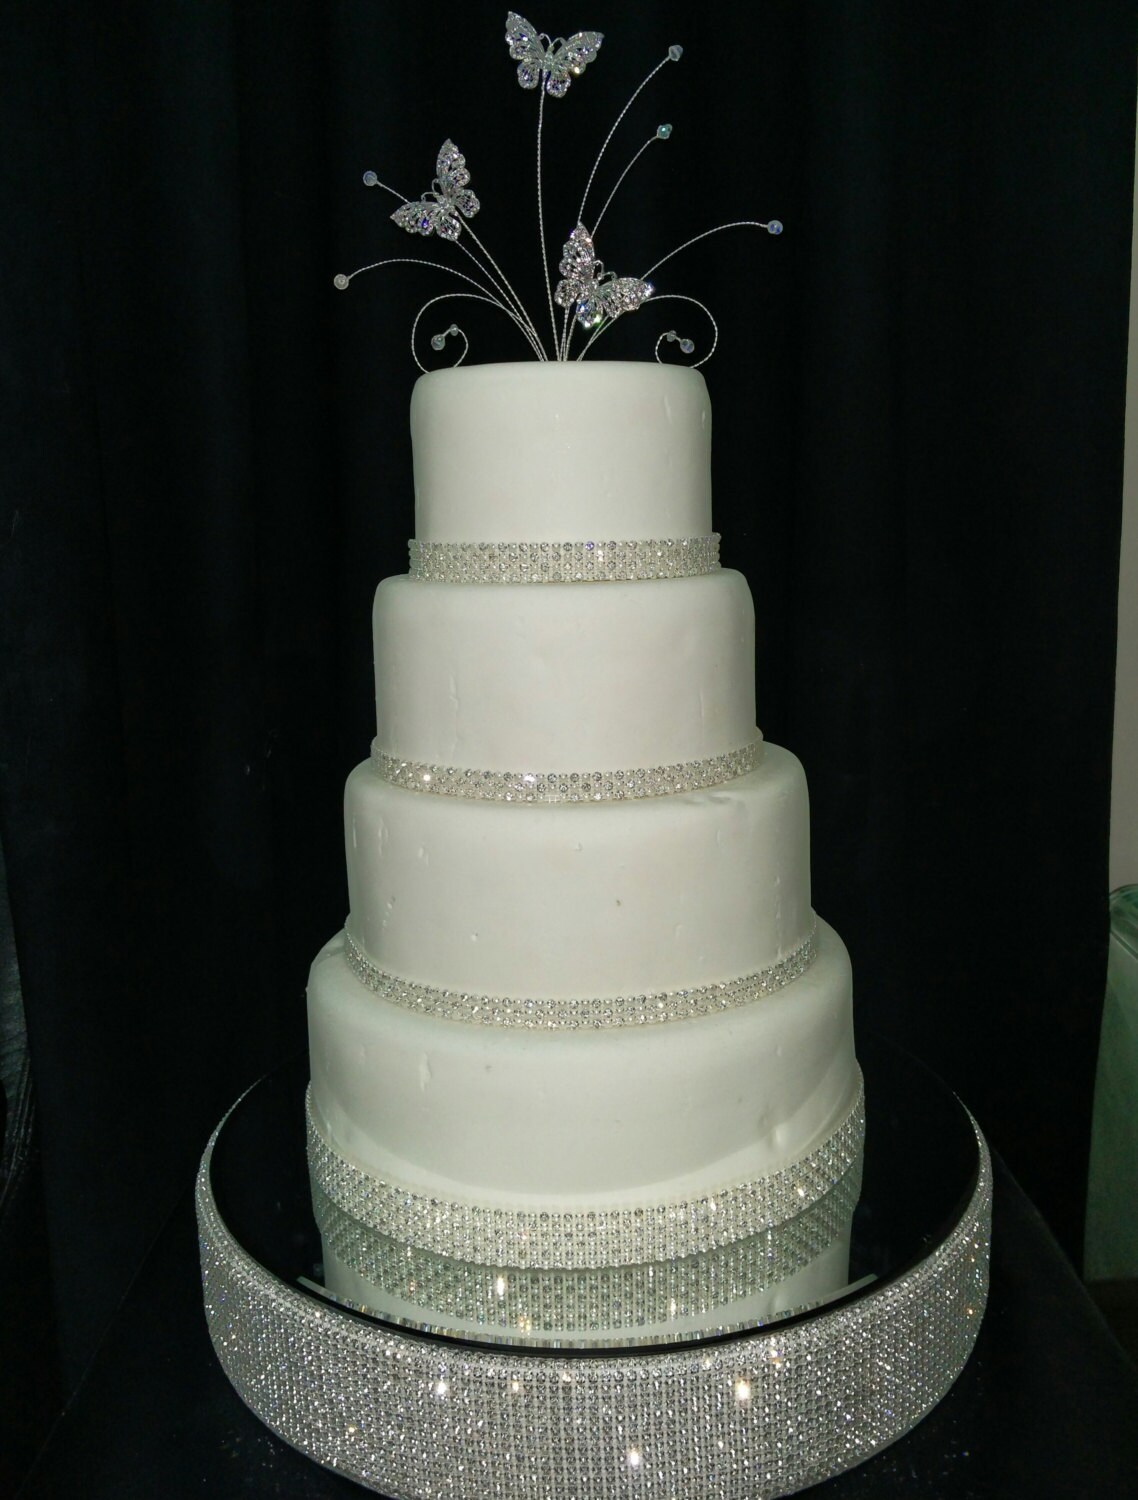 1 METRE LENGTH OF DIAMOND DIAMONTE MESH FOR WEDDING CAKE DECORATION CRAFT FLORAL 